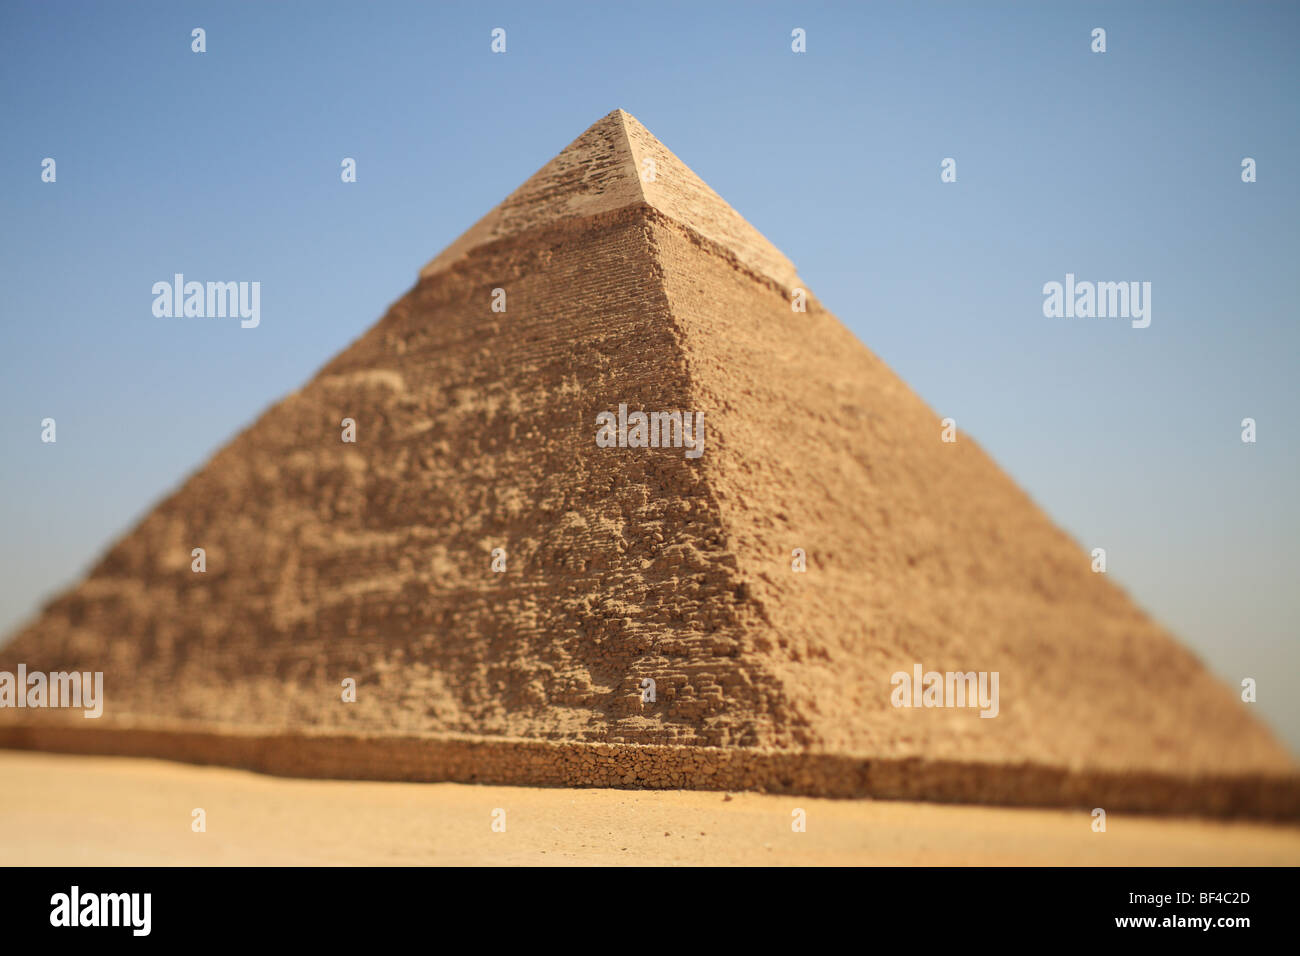 The pyramid of Khafre (Chephren) - Giza, Egypt Stock Photo